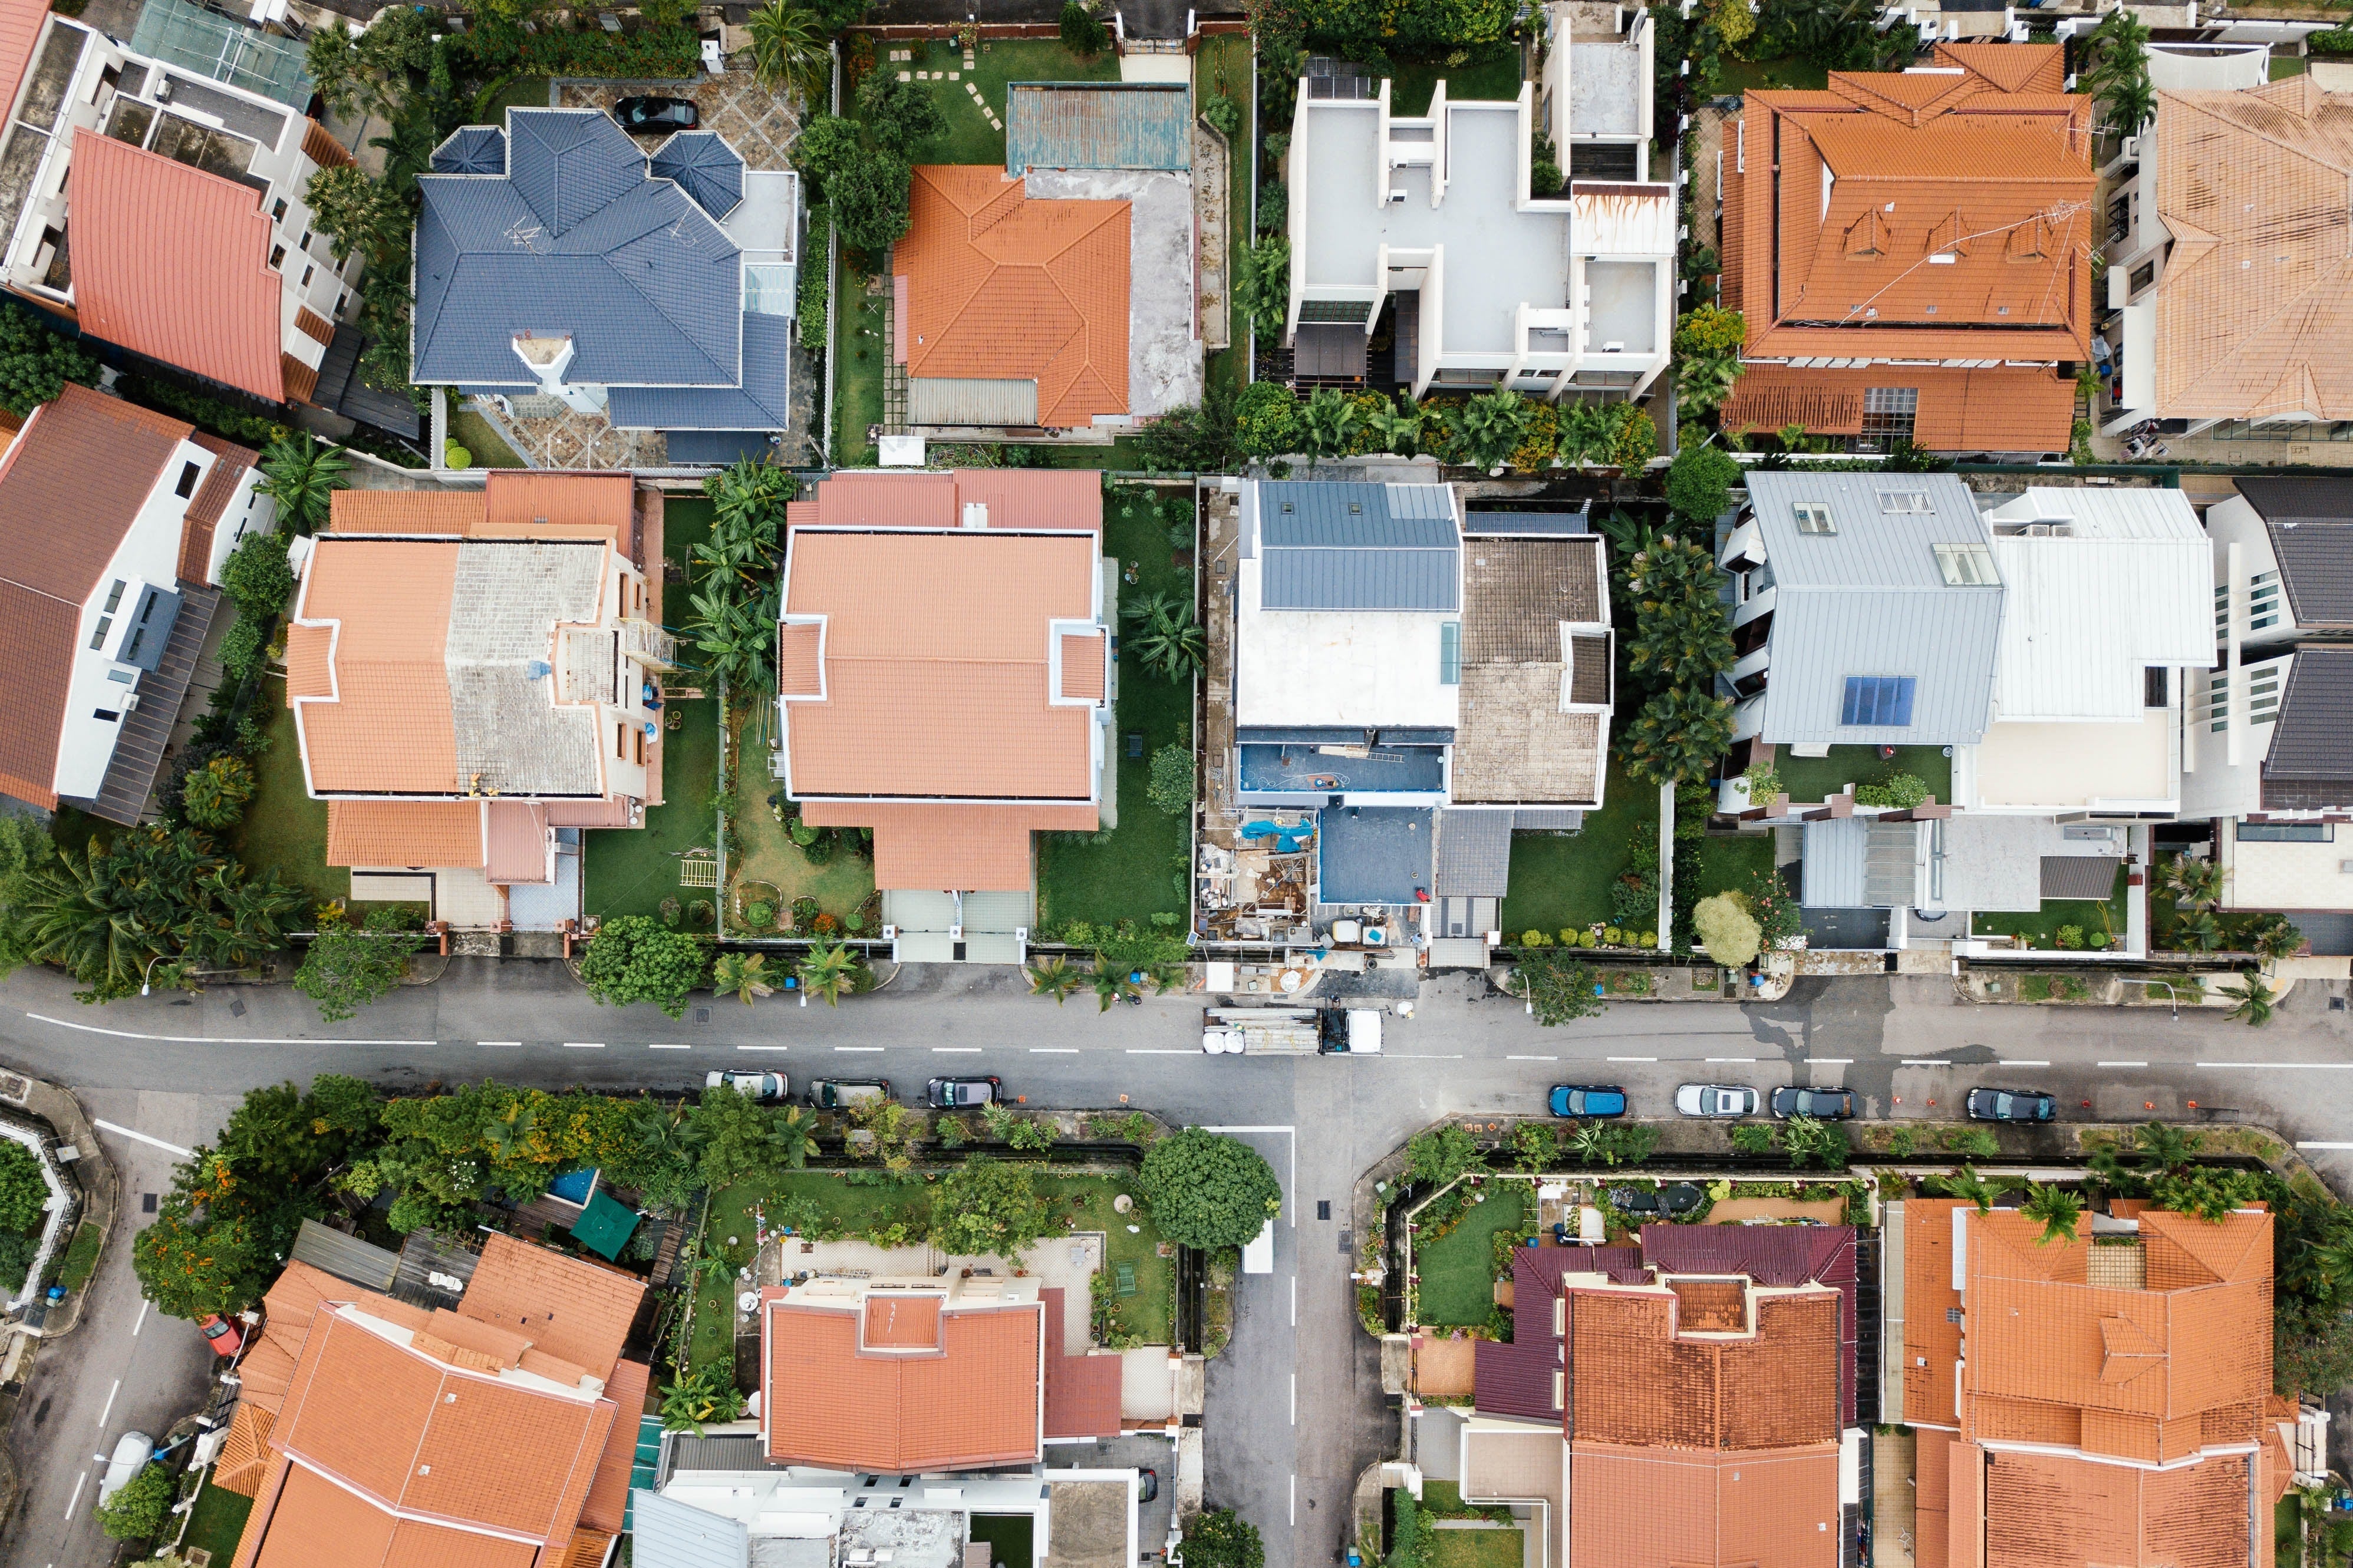 A bird's-eye view of a neighborhood of large houses.